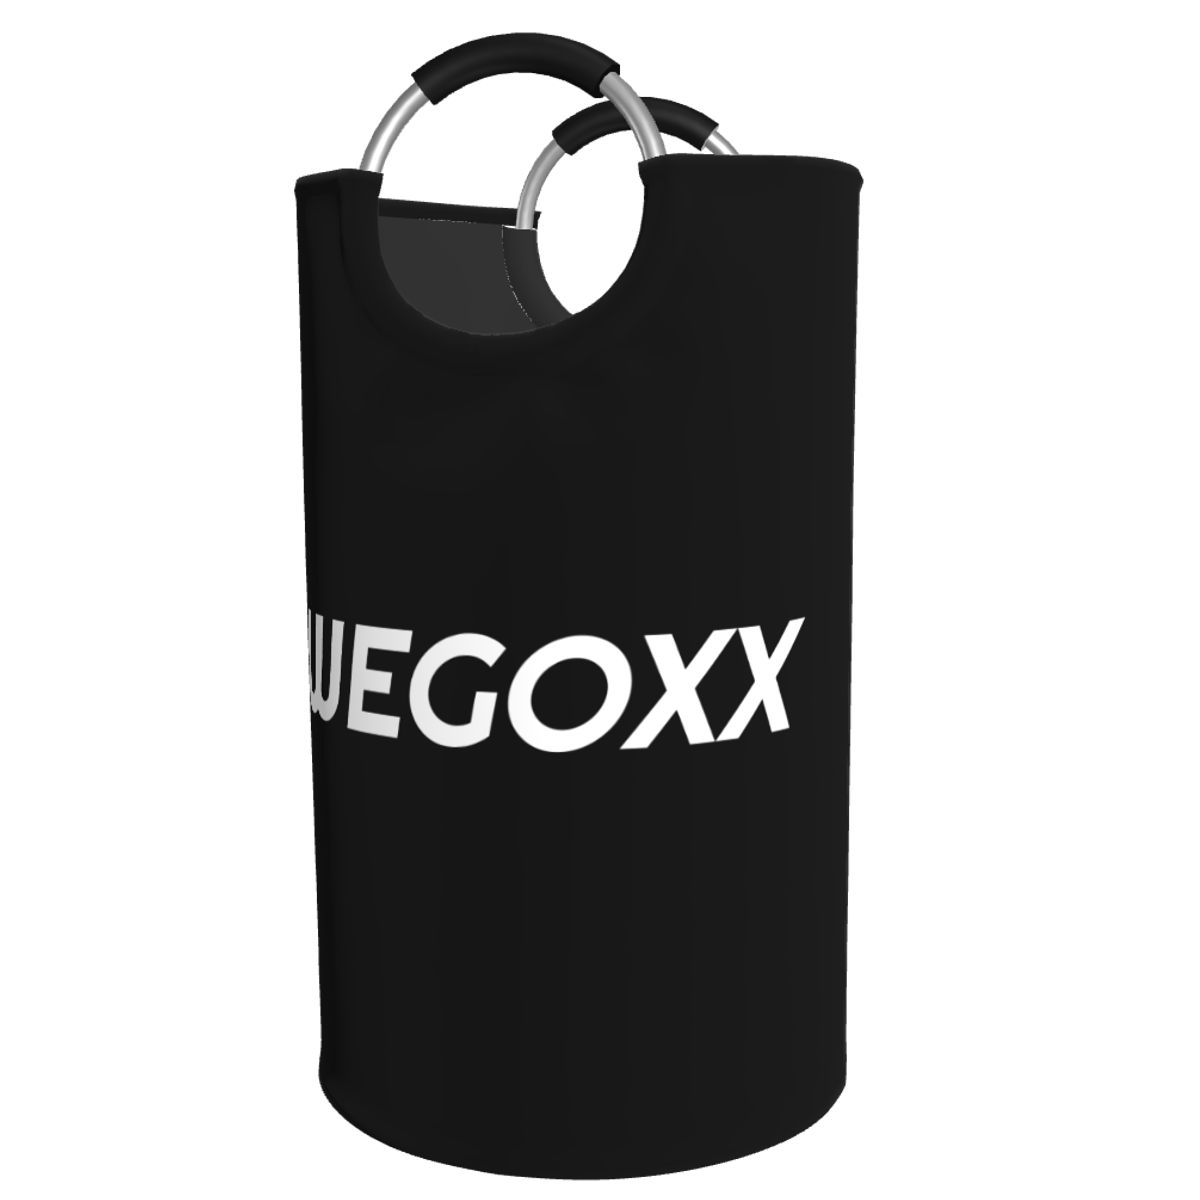 WEGOXX Round Dirty Clothes Pack